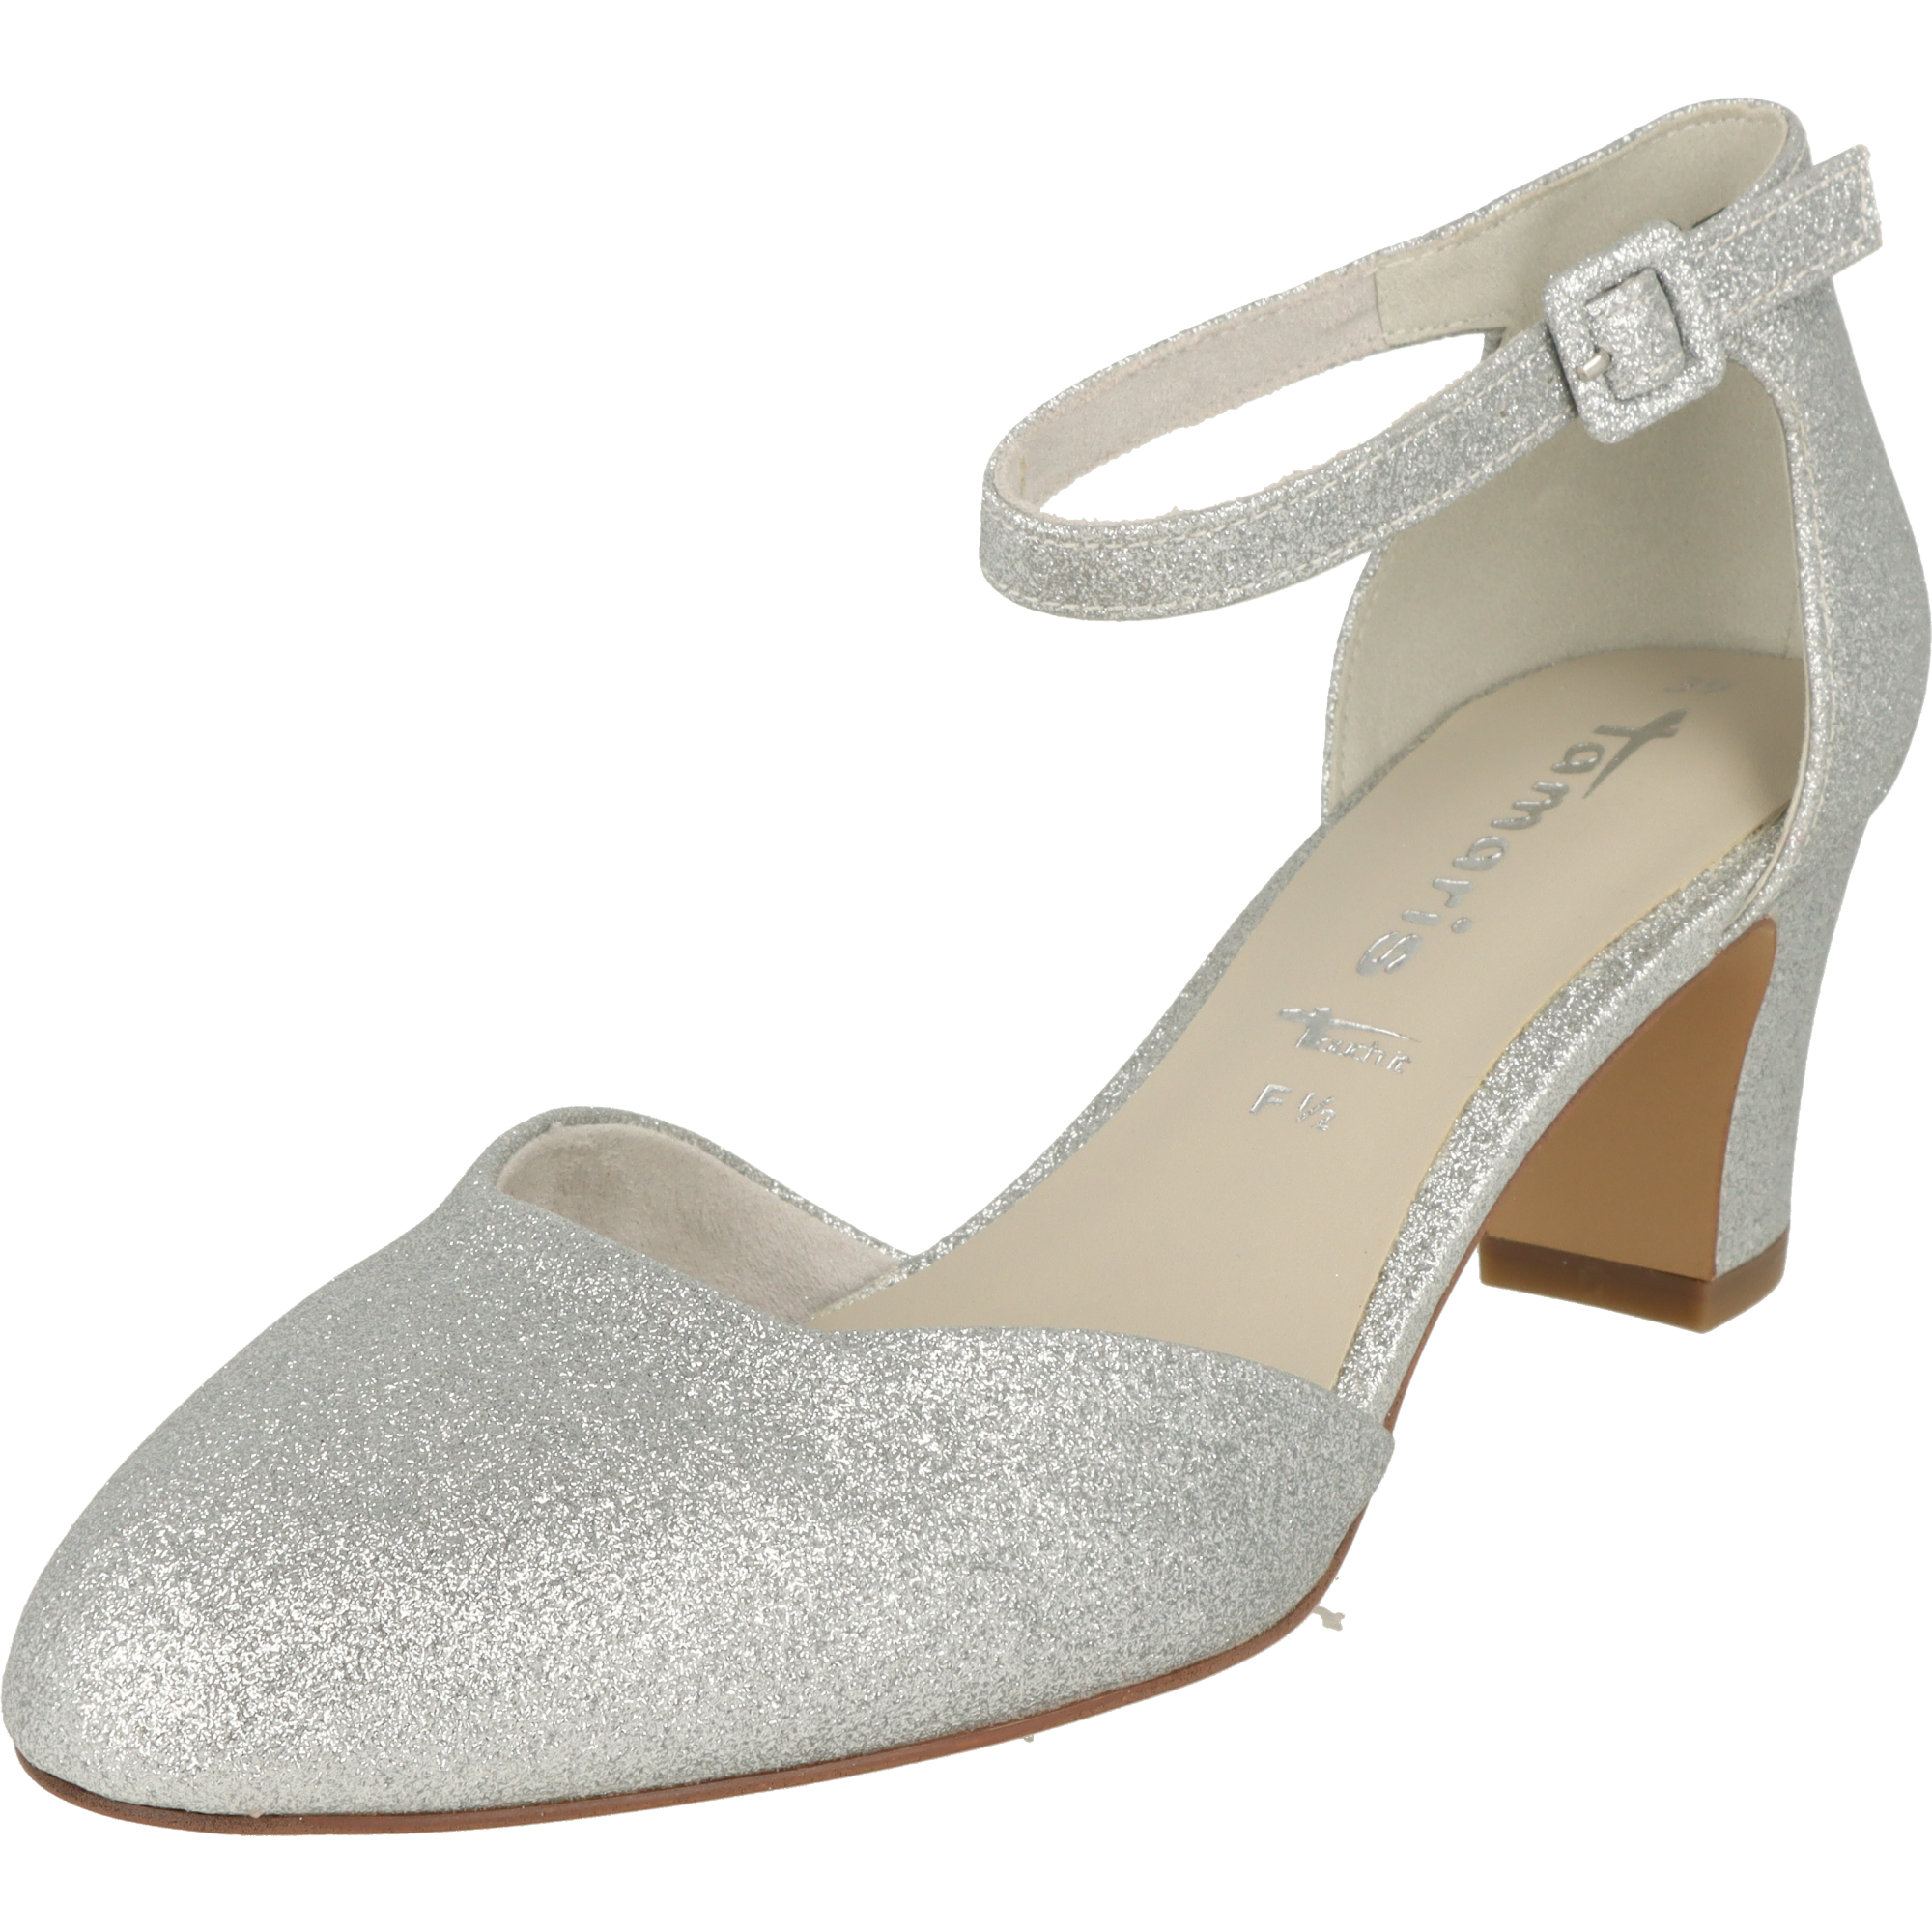 Tamaris Vegan Damen Schuhe elegante Hochzeitschuhe 1-24432-20 Silber Glitzer